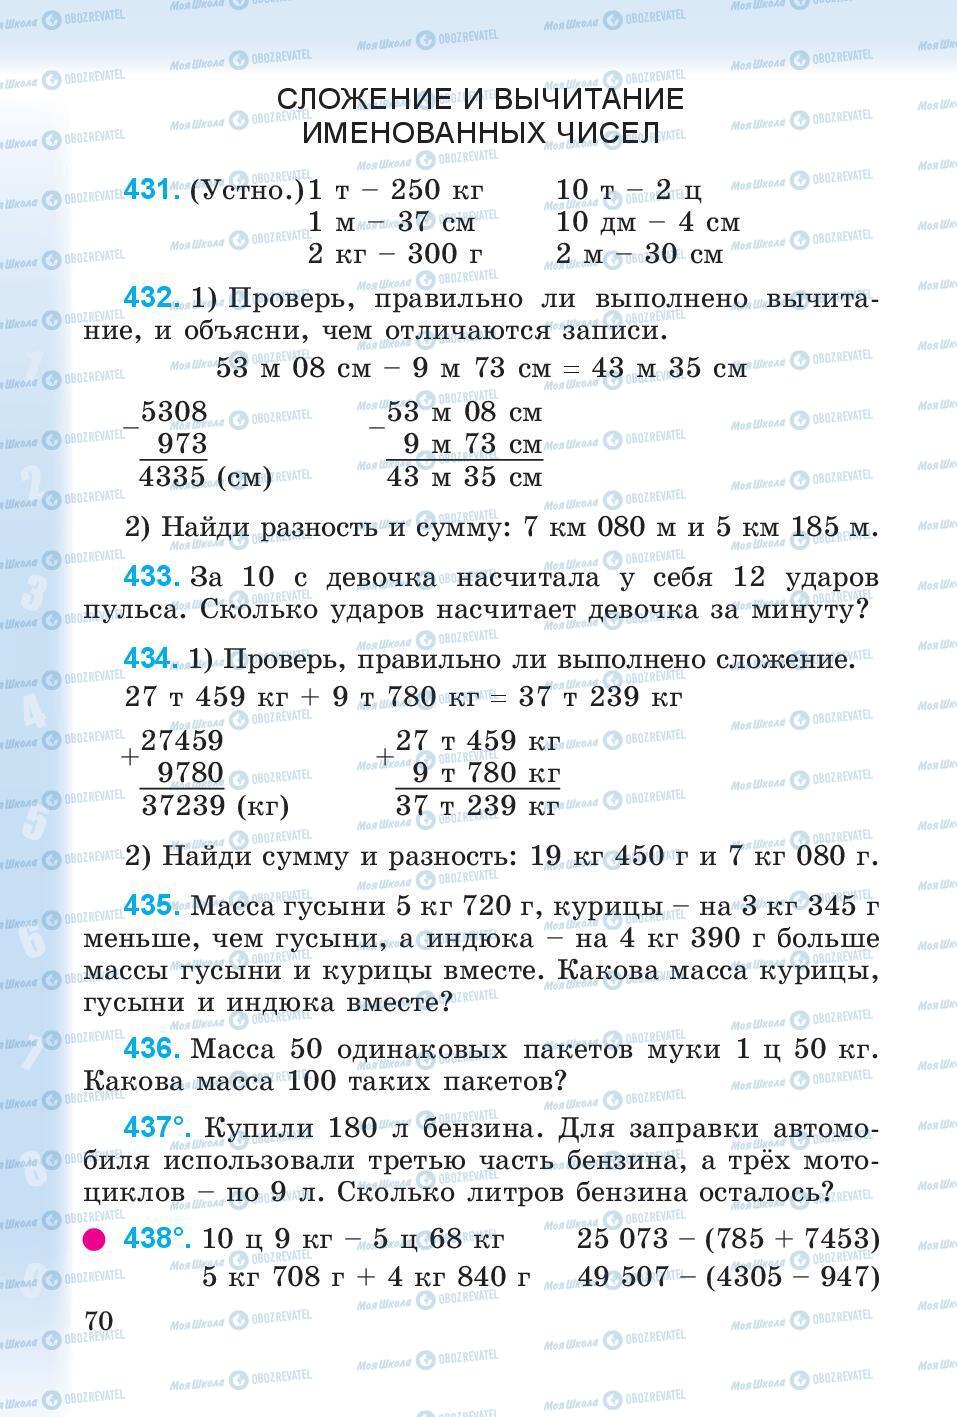 Учебники Математика 4 класс страница 70